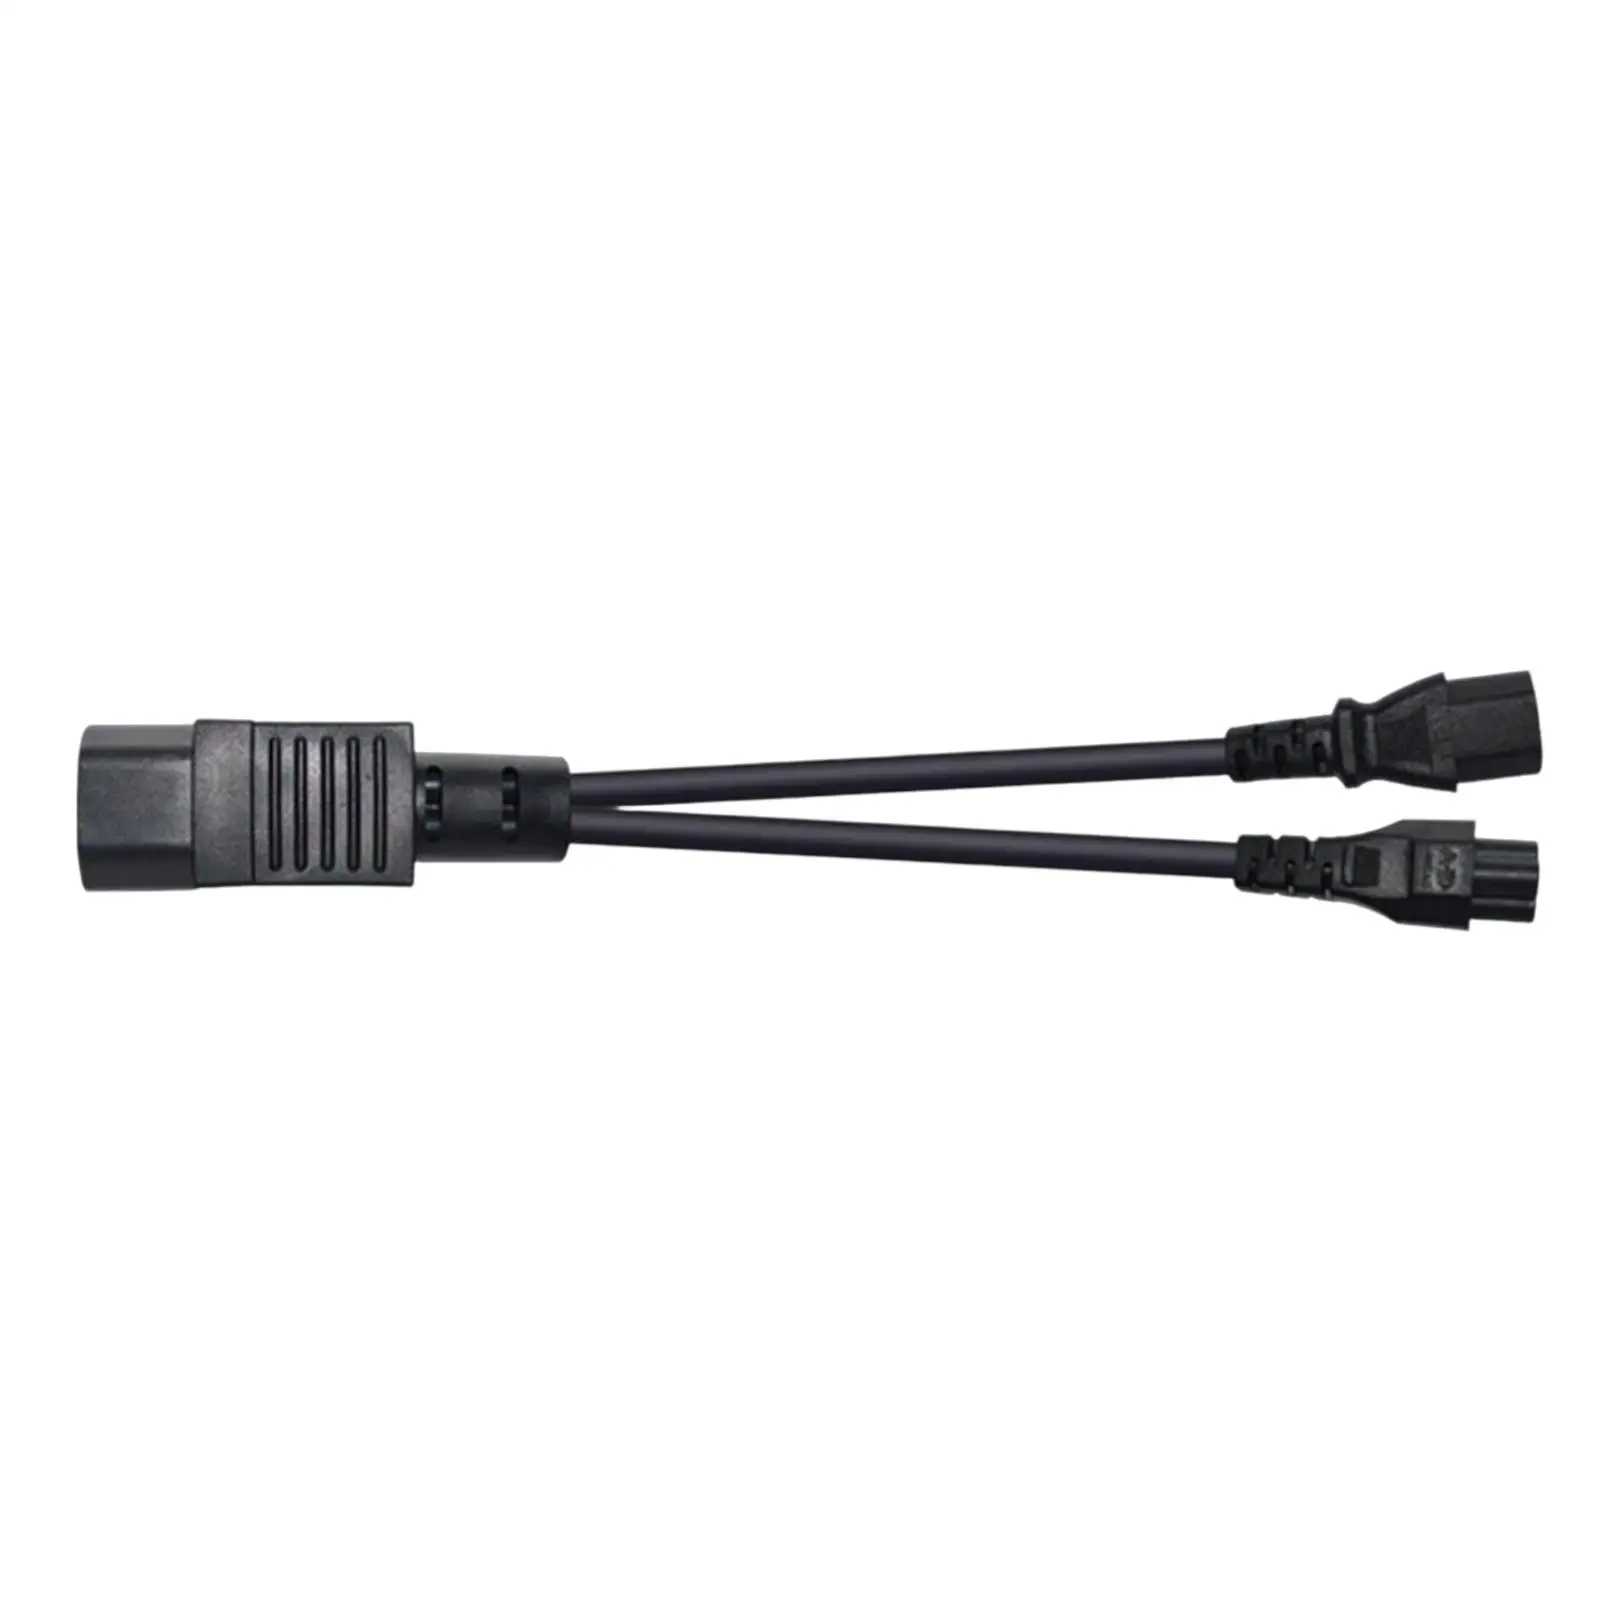 IEC320 C14 to IEC320 C13+C5 Y Splitter Power Cord Splitter for PC